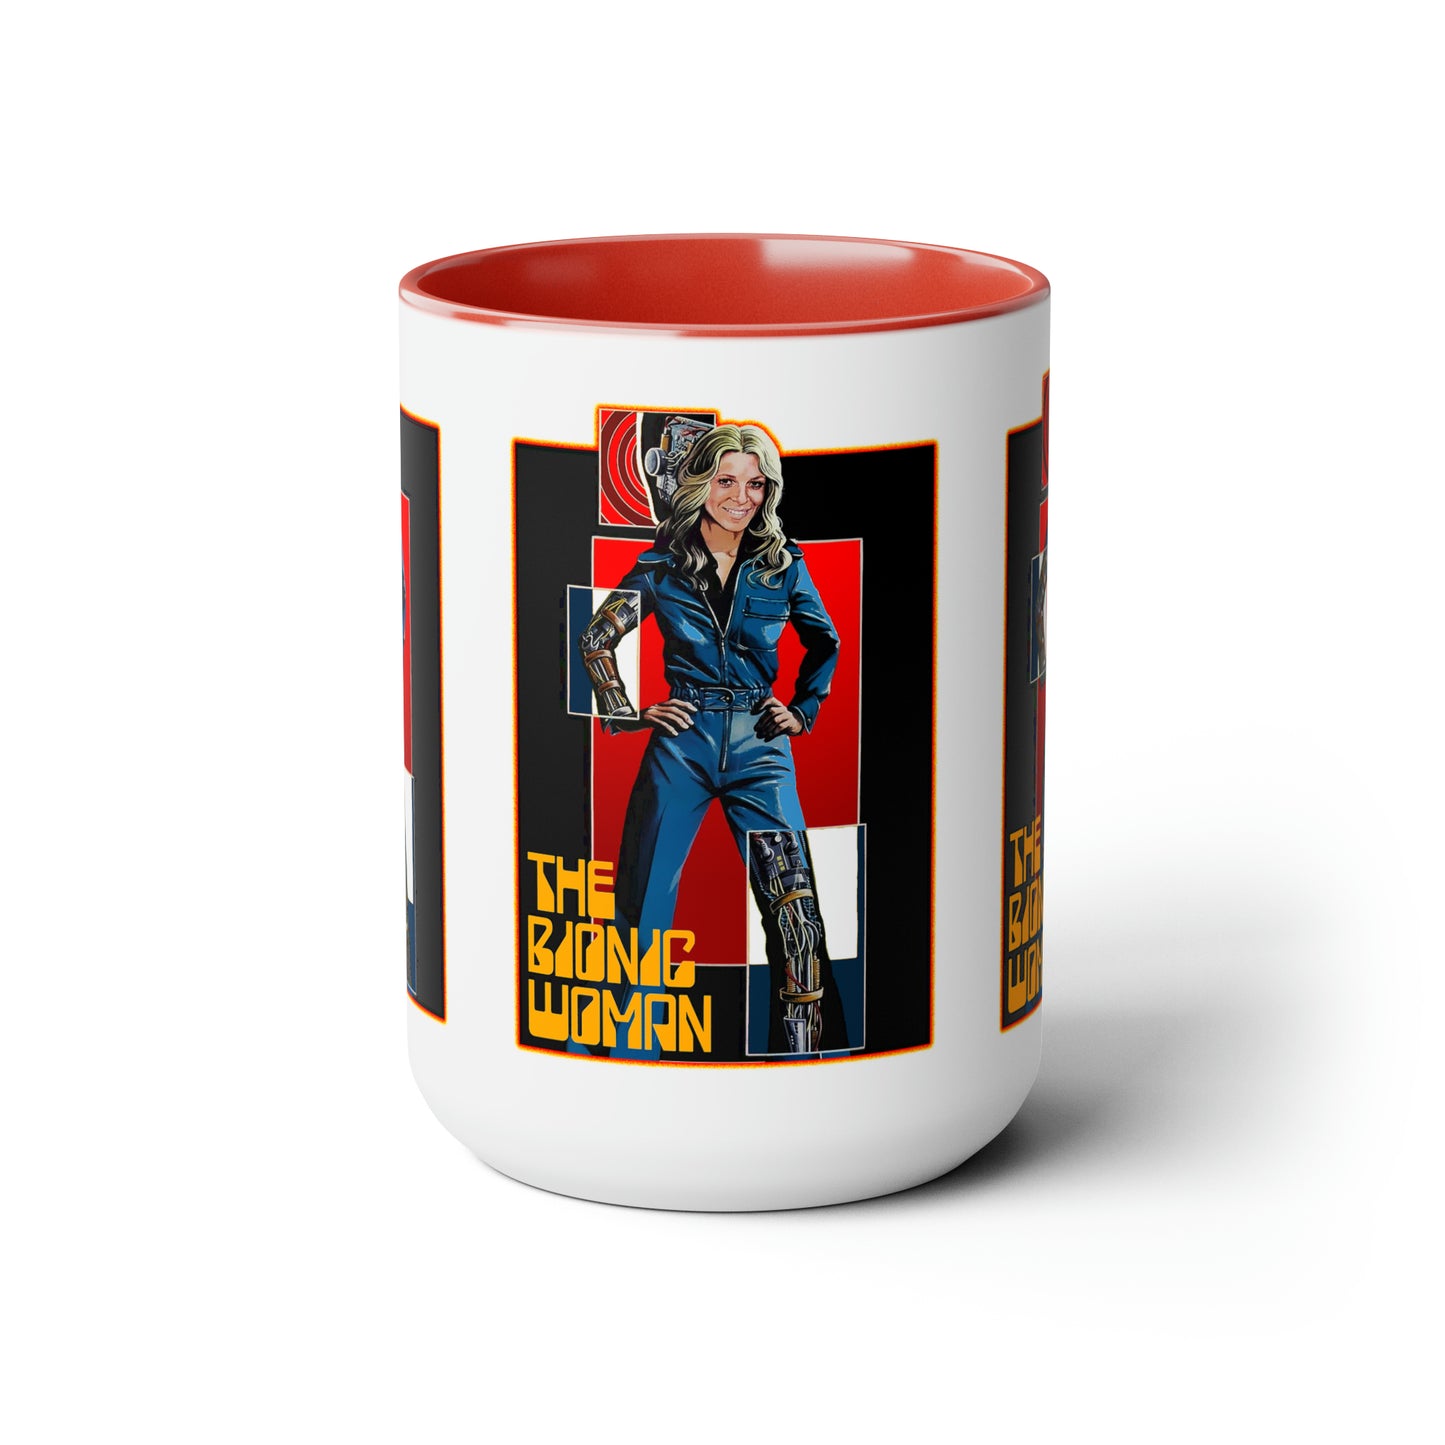 THE BIONIC WOMAN Version 1 Coffee Mug 15oz